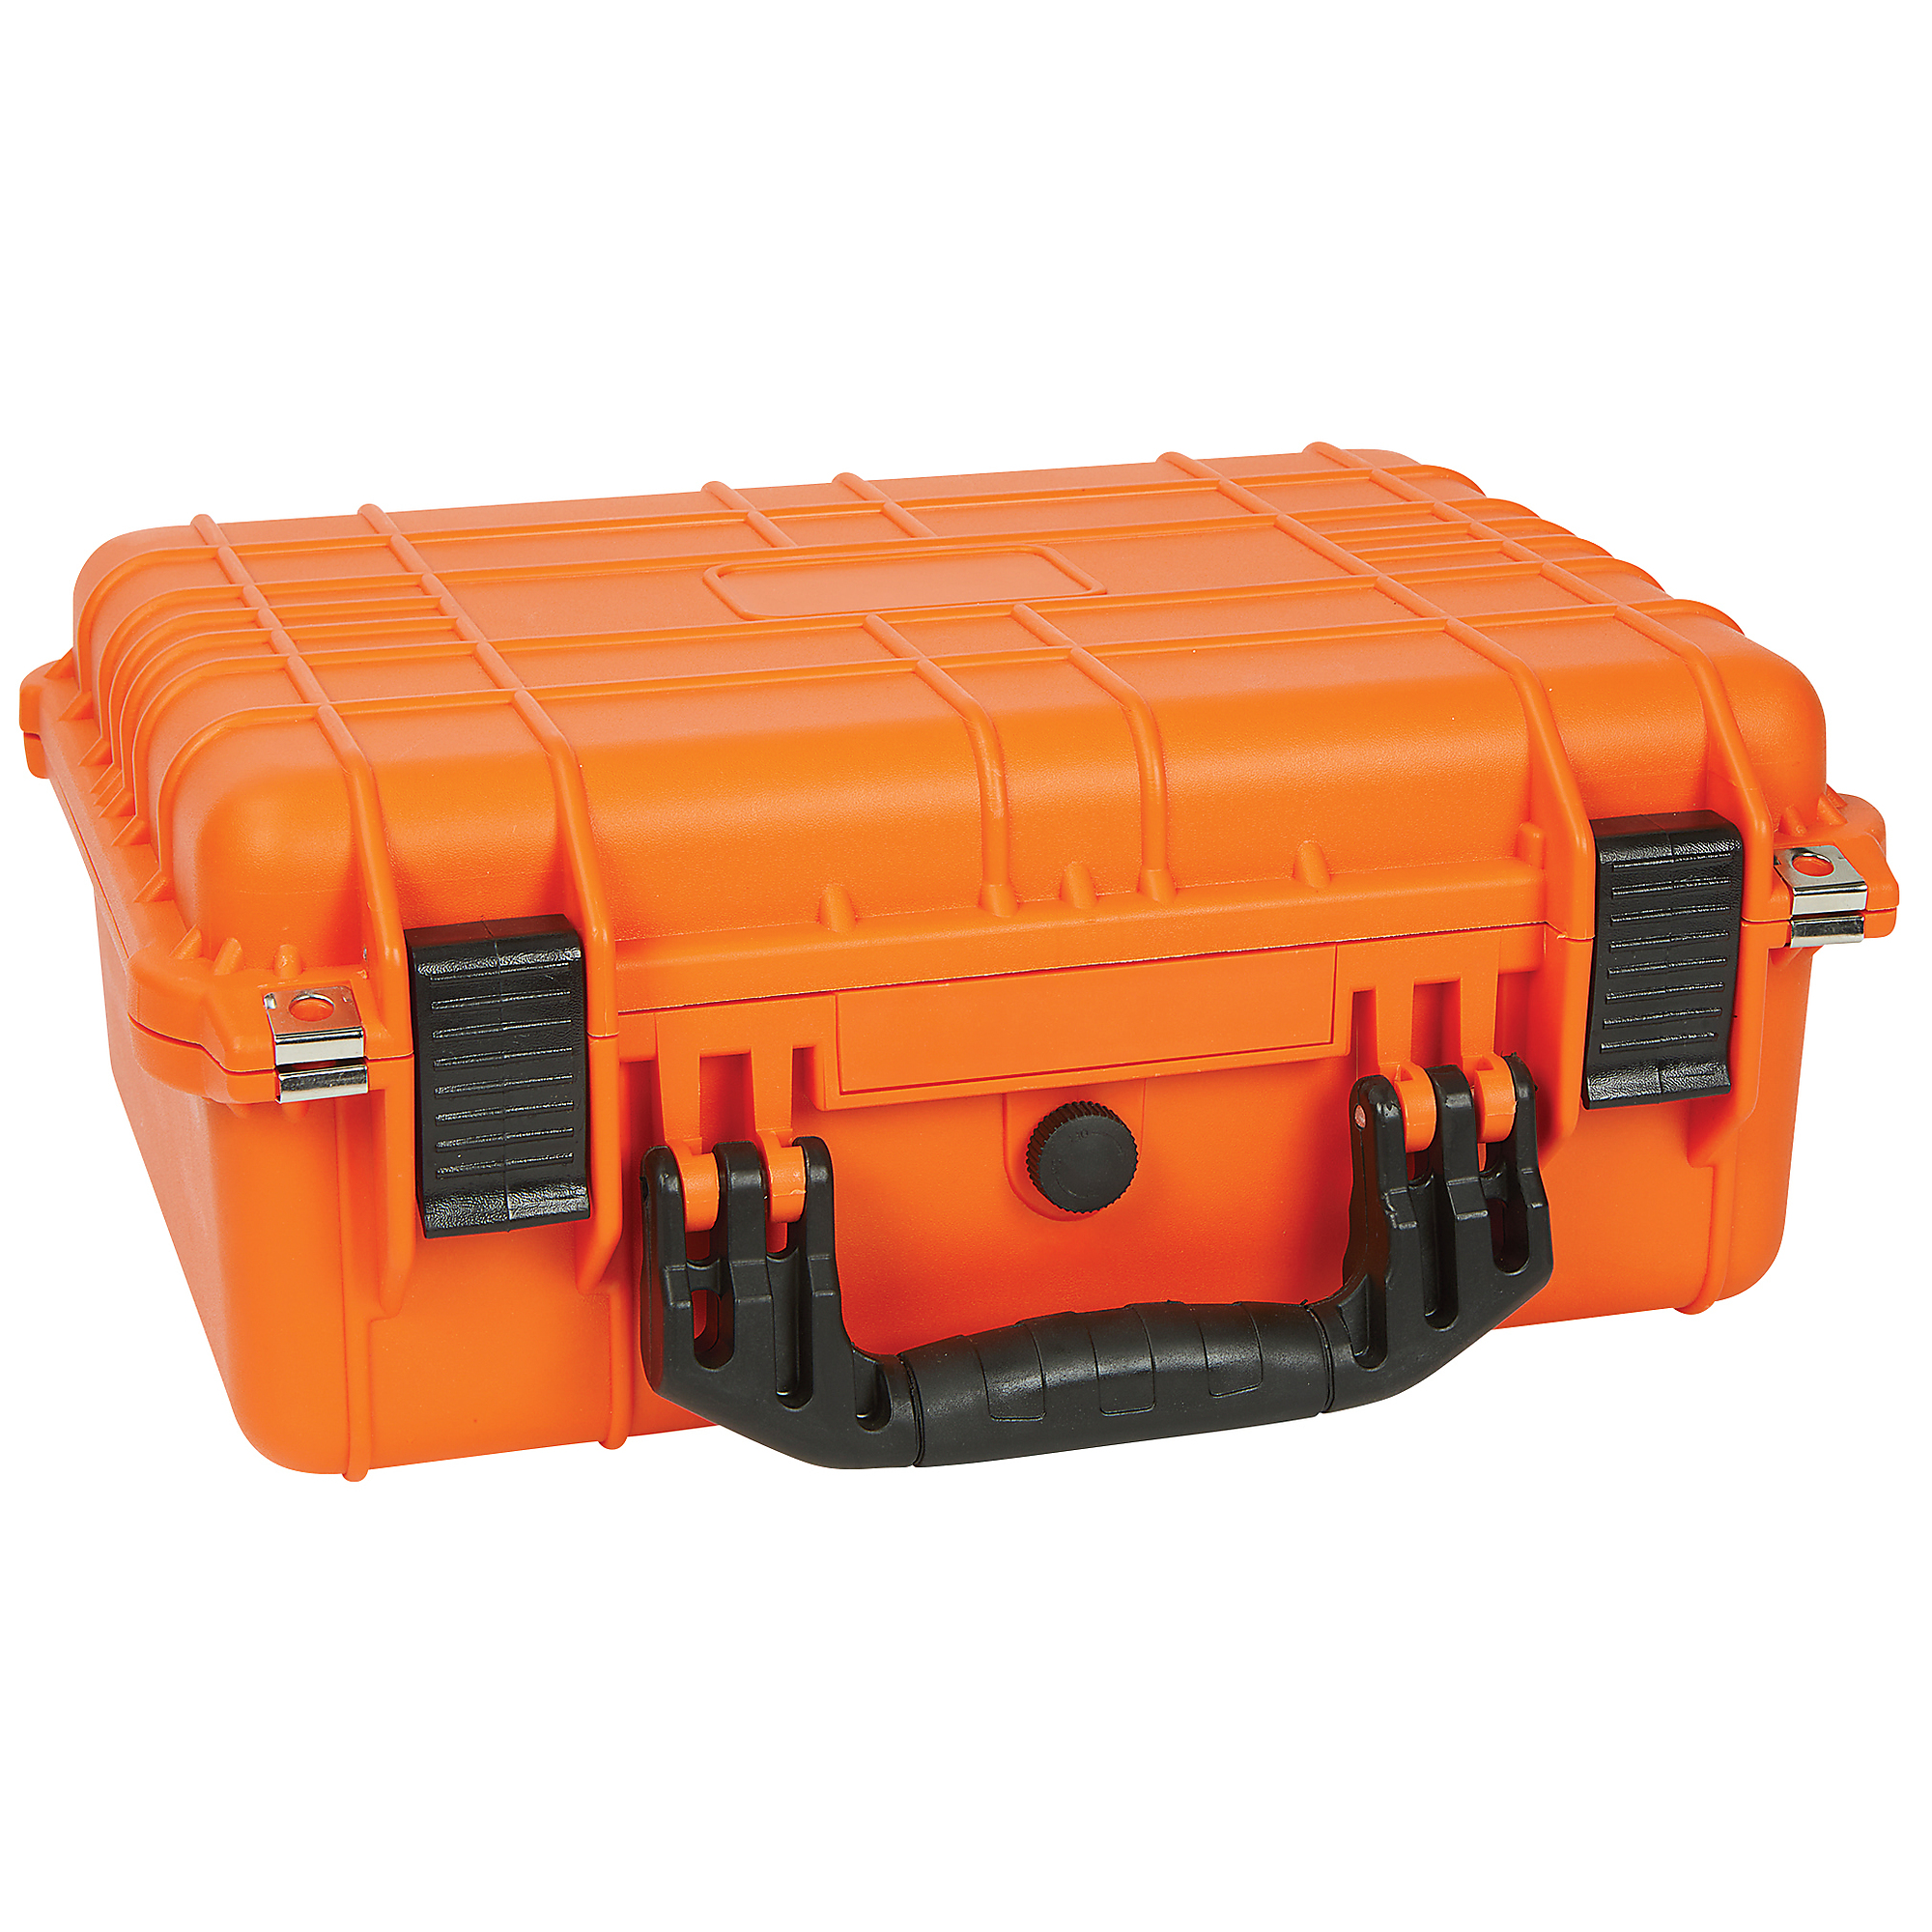 Strongway 16Inch Plastic Waterproof Storage Case, Orange, Model MJ-5018_ORG